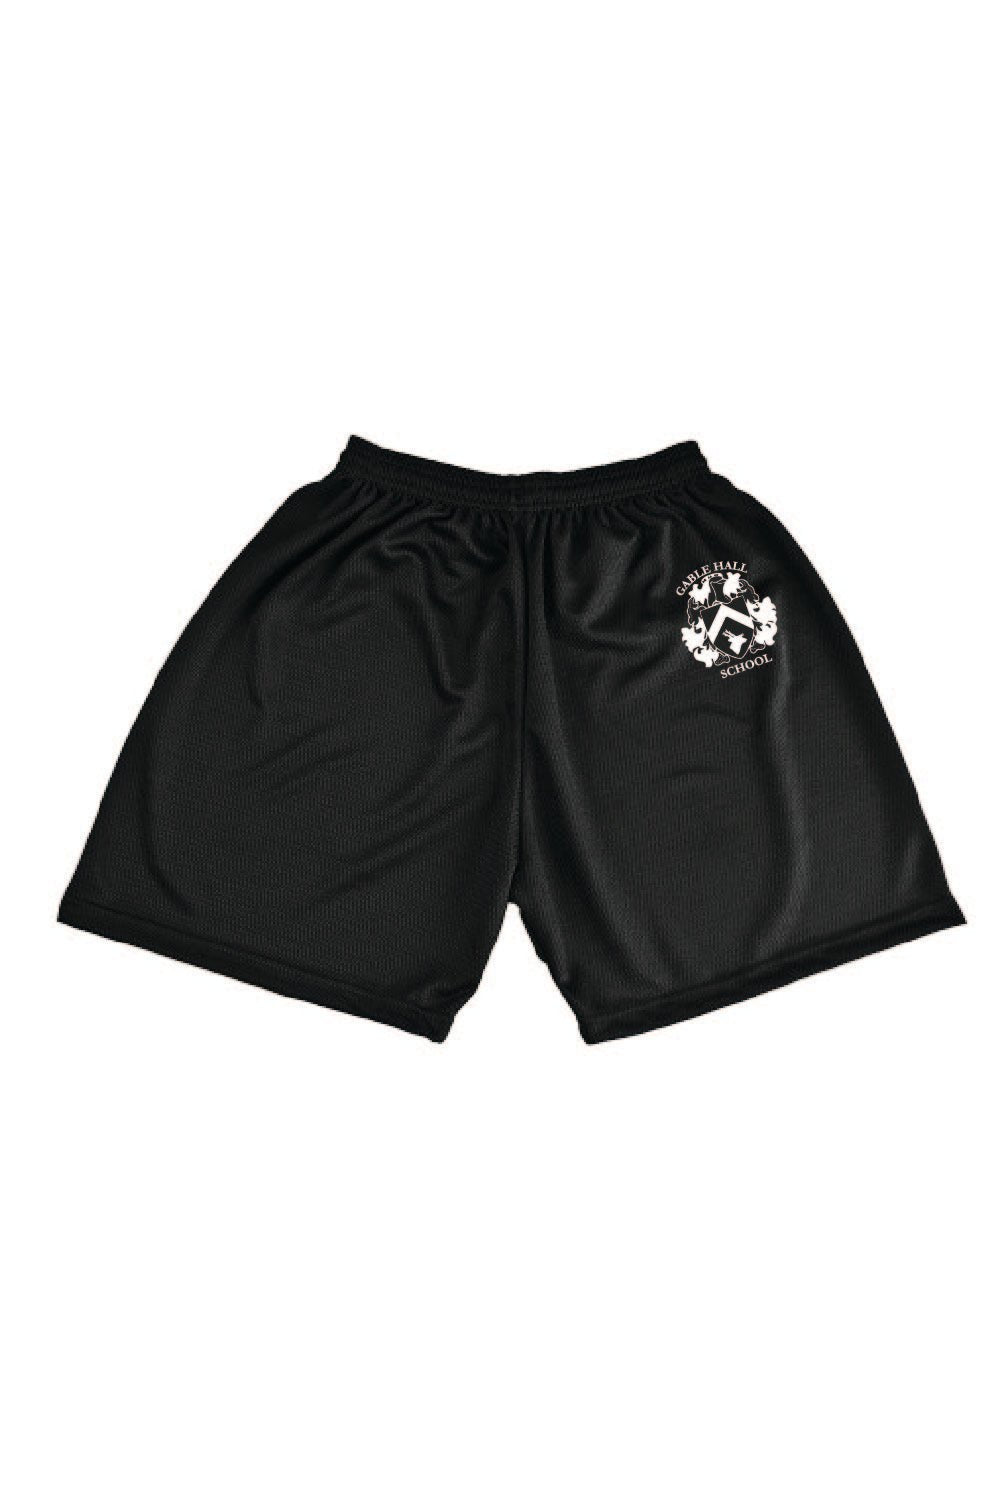 Gable Hall PE Shorts - Uniformwise Schoolwear